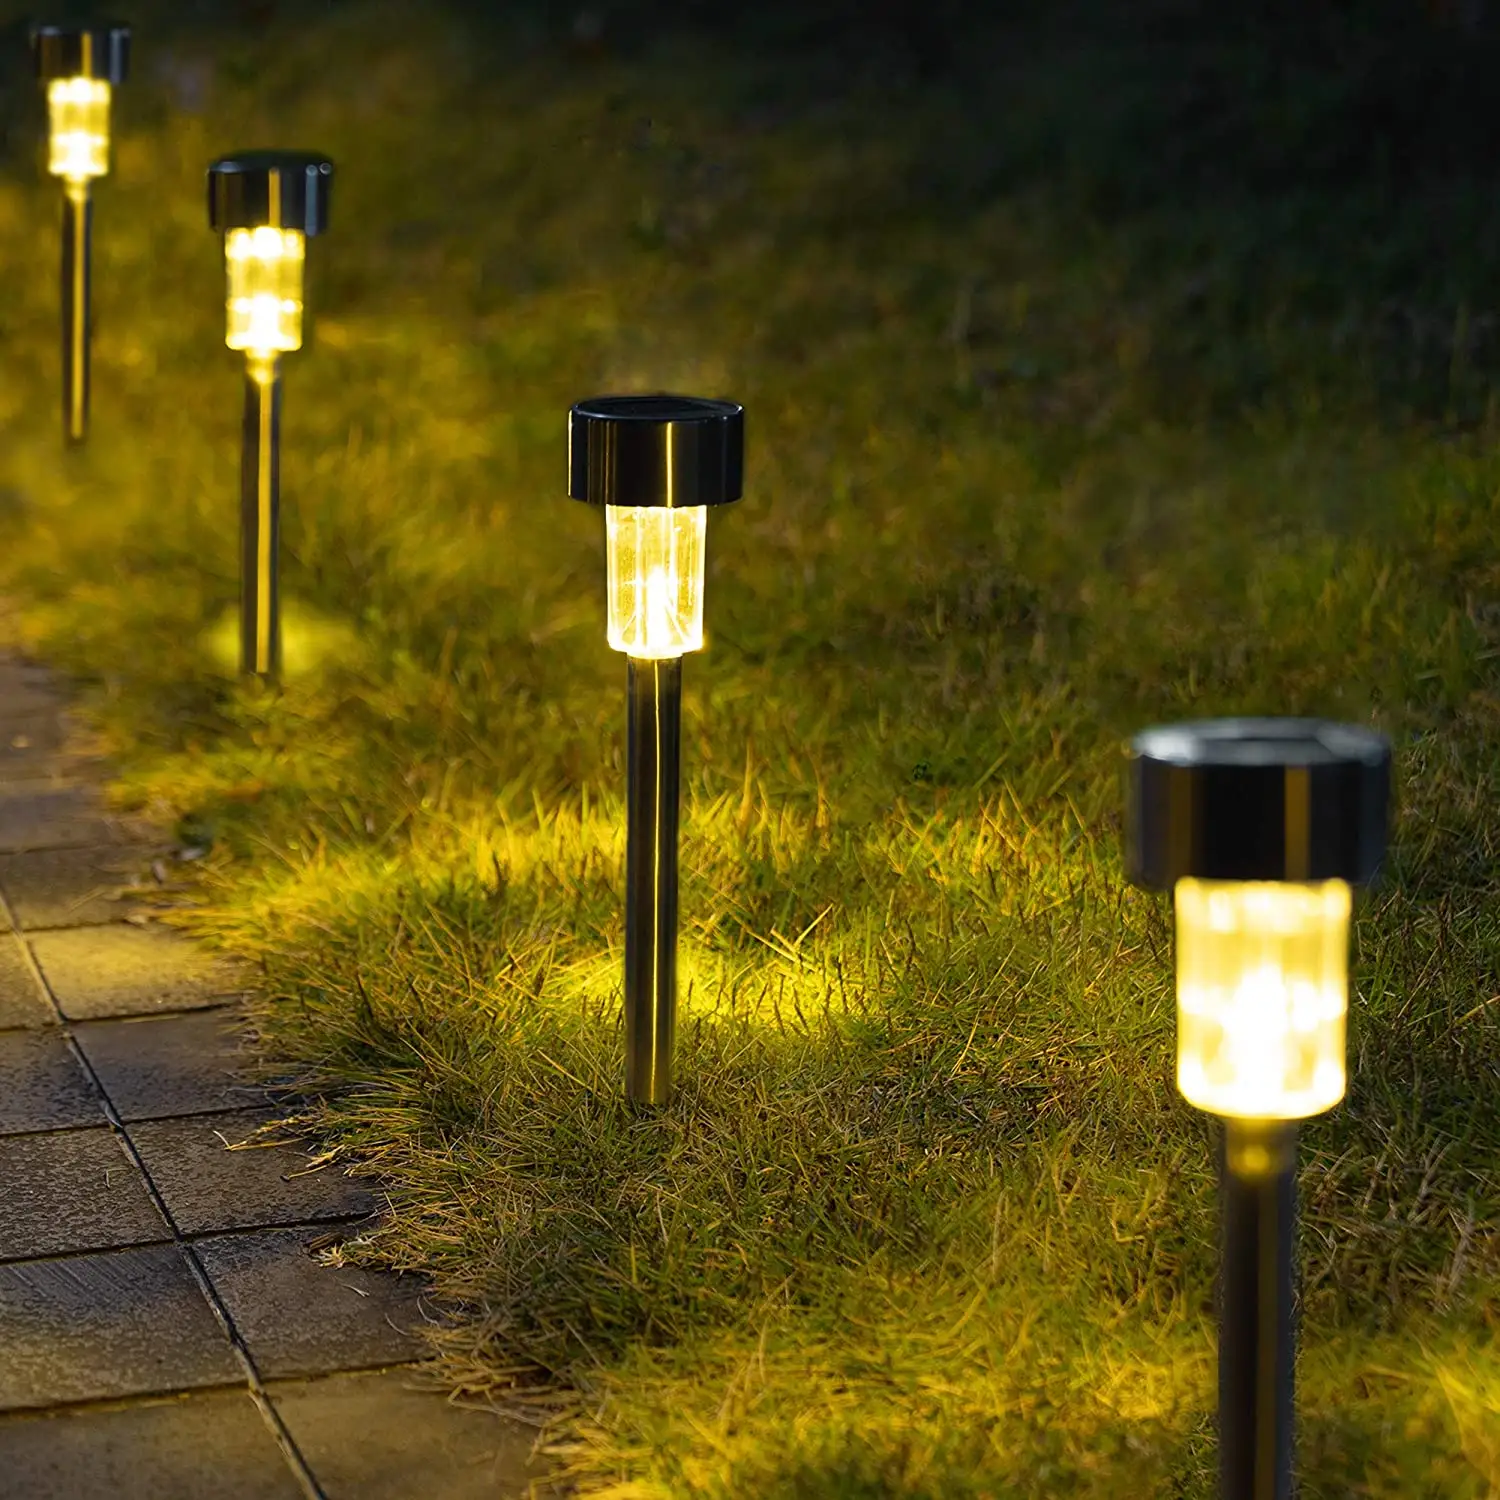 Outdoor solar lamp 12 pieces of solar channel lamp stainless steel garden waterproof garden light suitable for walkway lawn